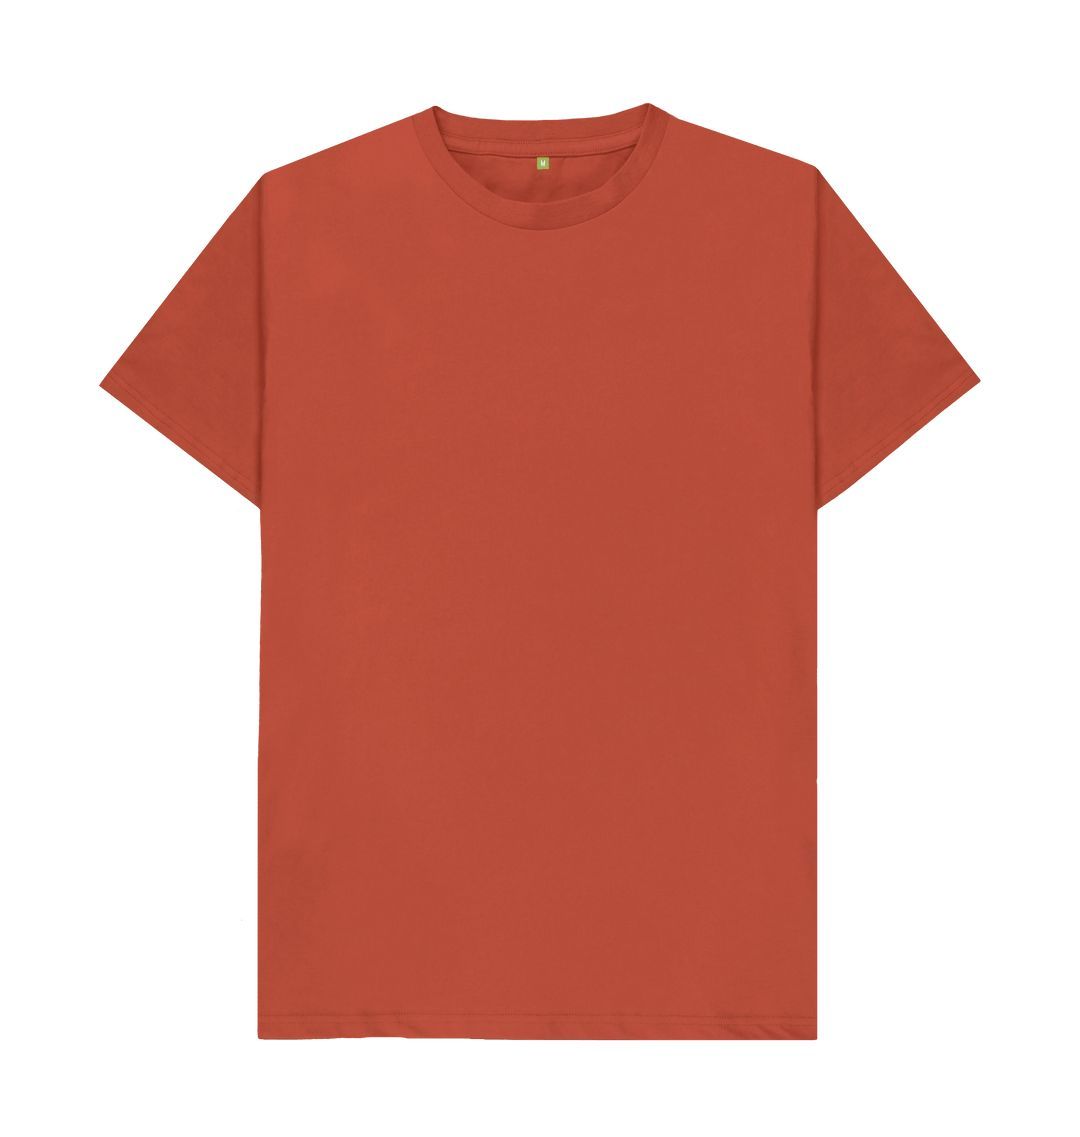 Rust Men's organic cotton t-shirt